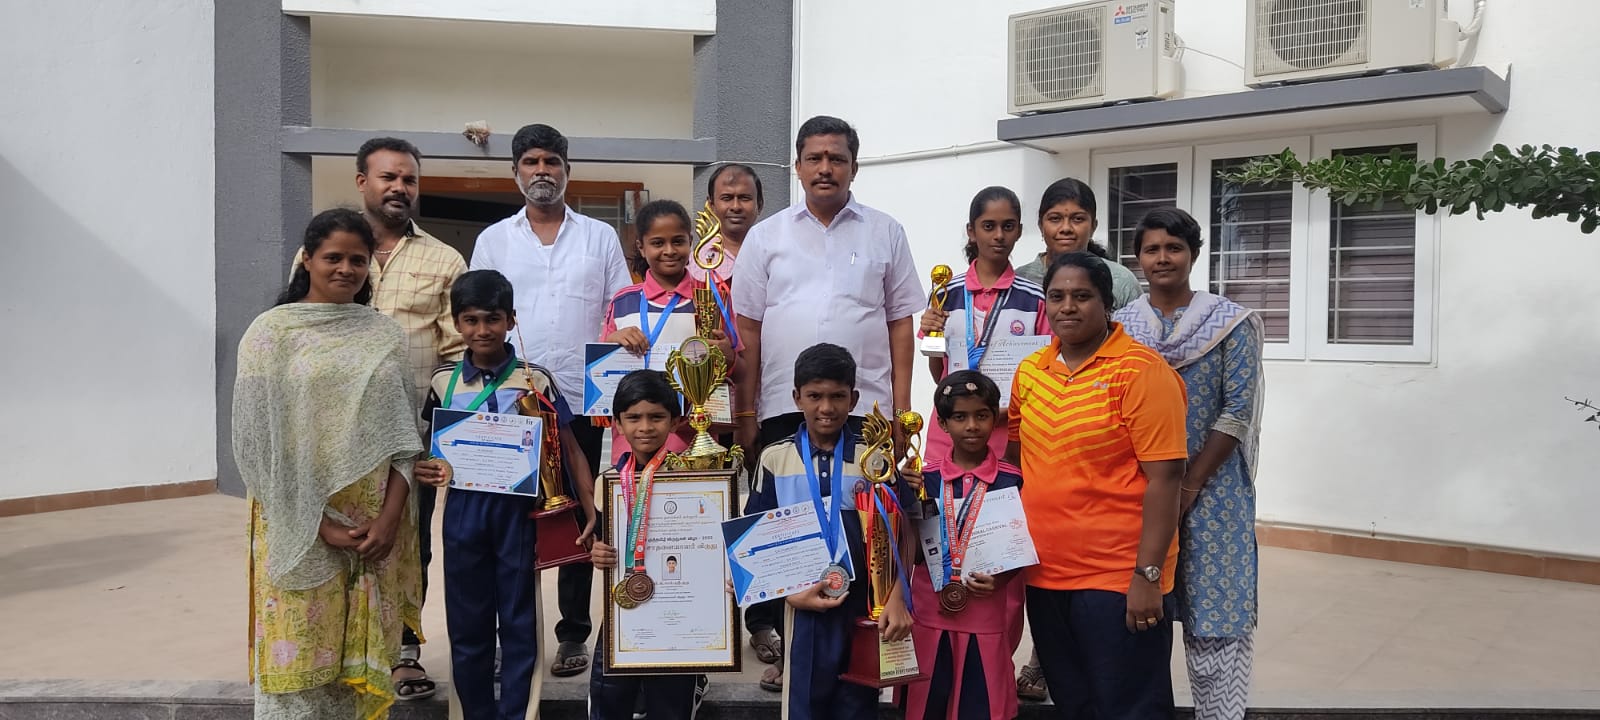 Sri Ambal Thulasi Public School - International Yoga Day 2023